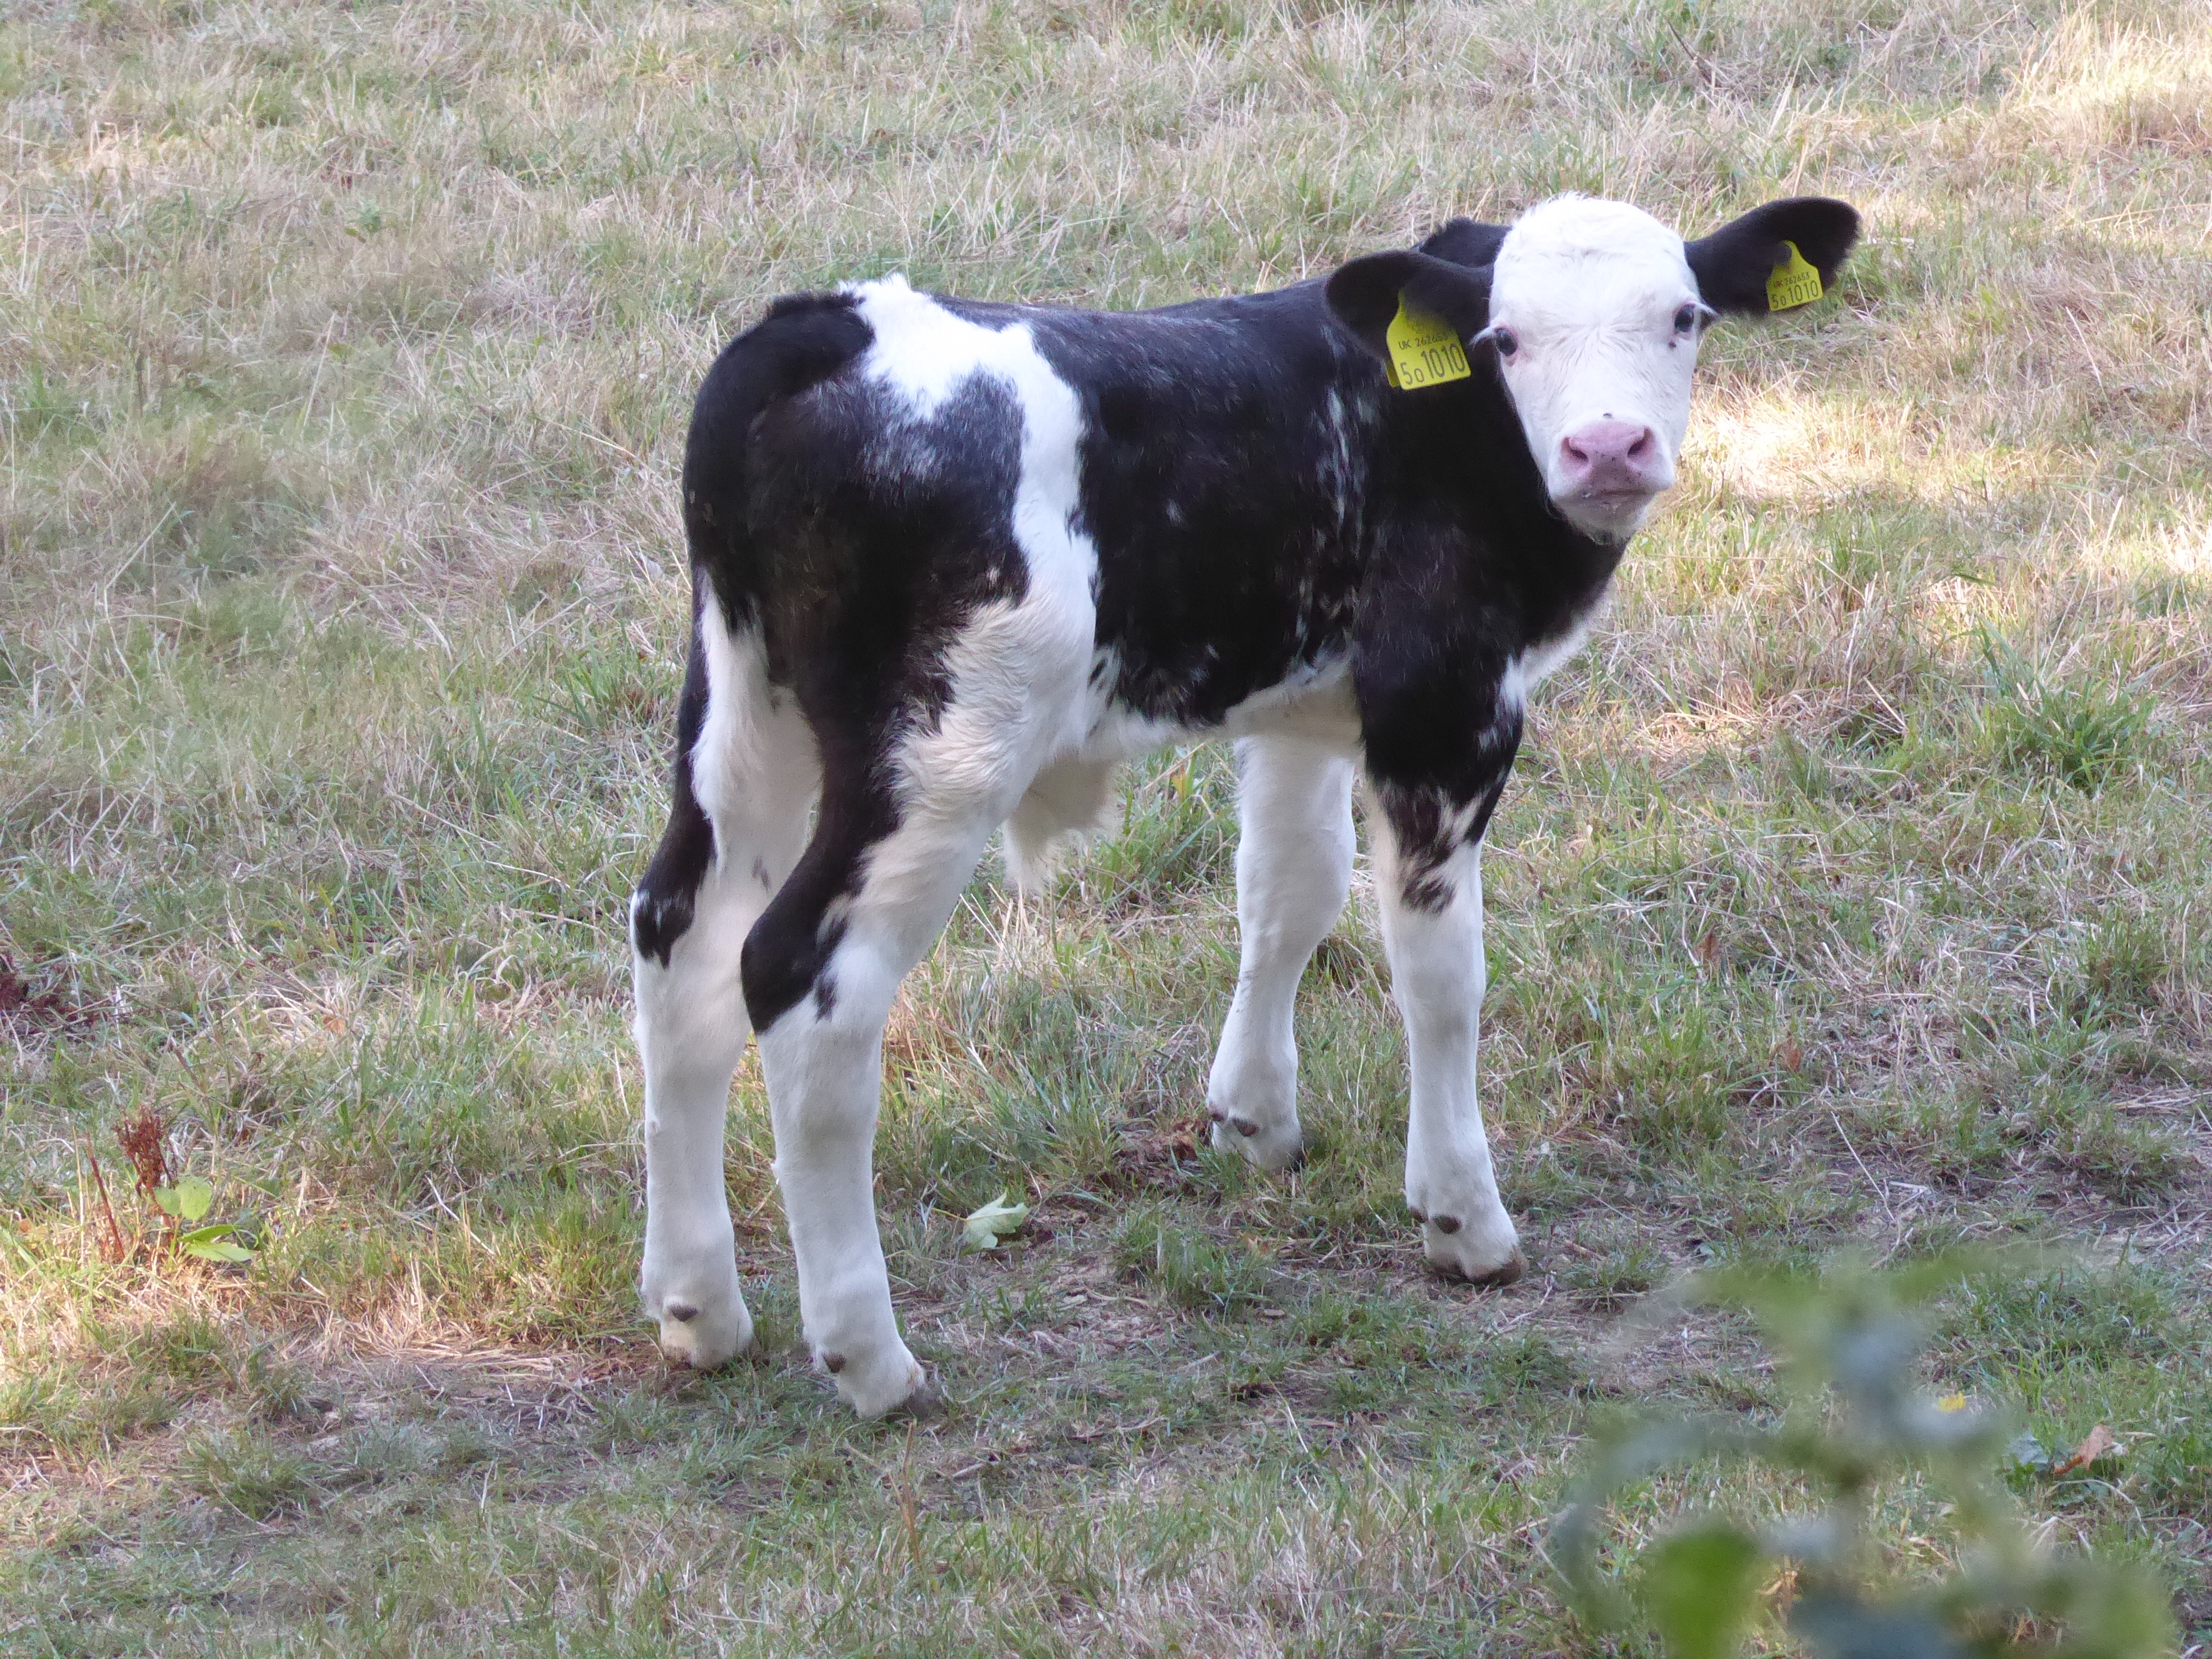 A calf on the Downs near Lewes